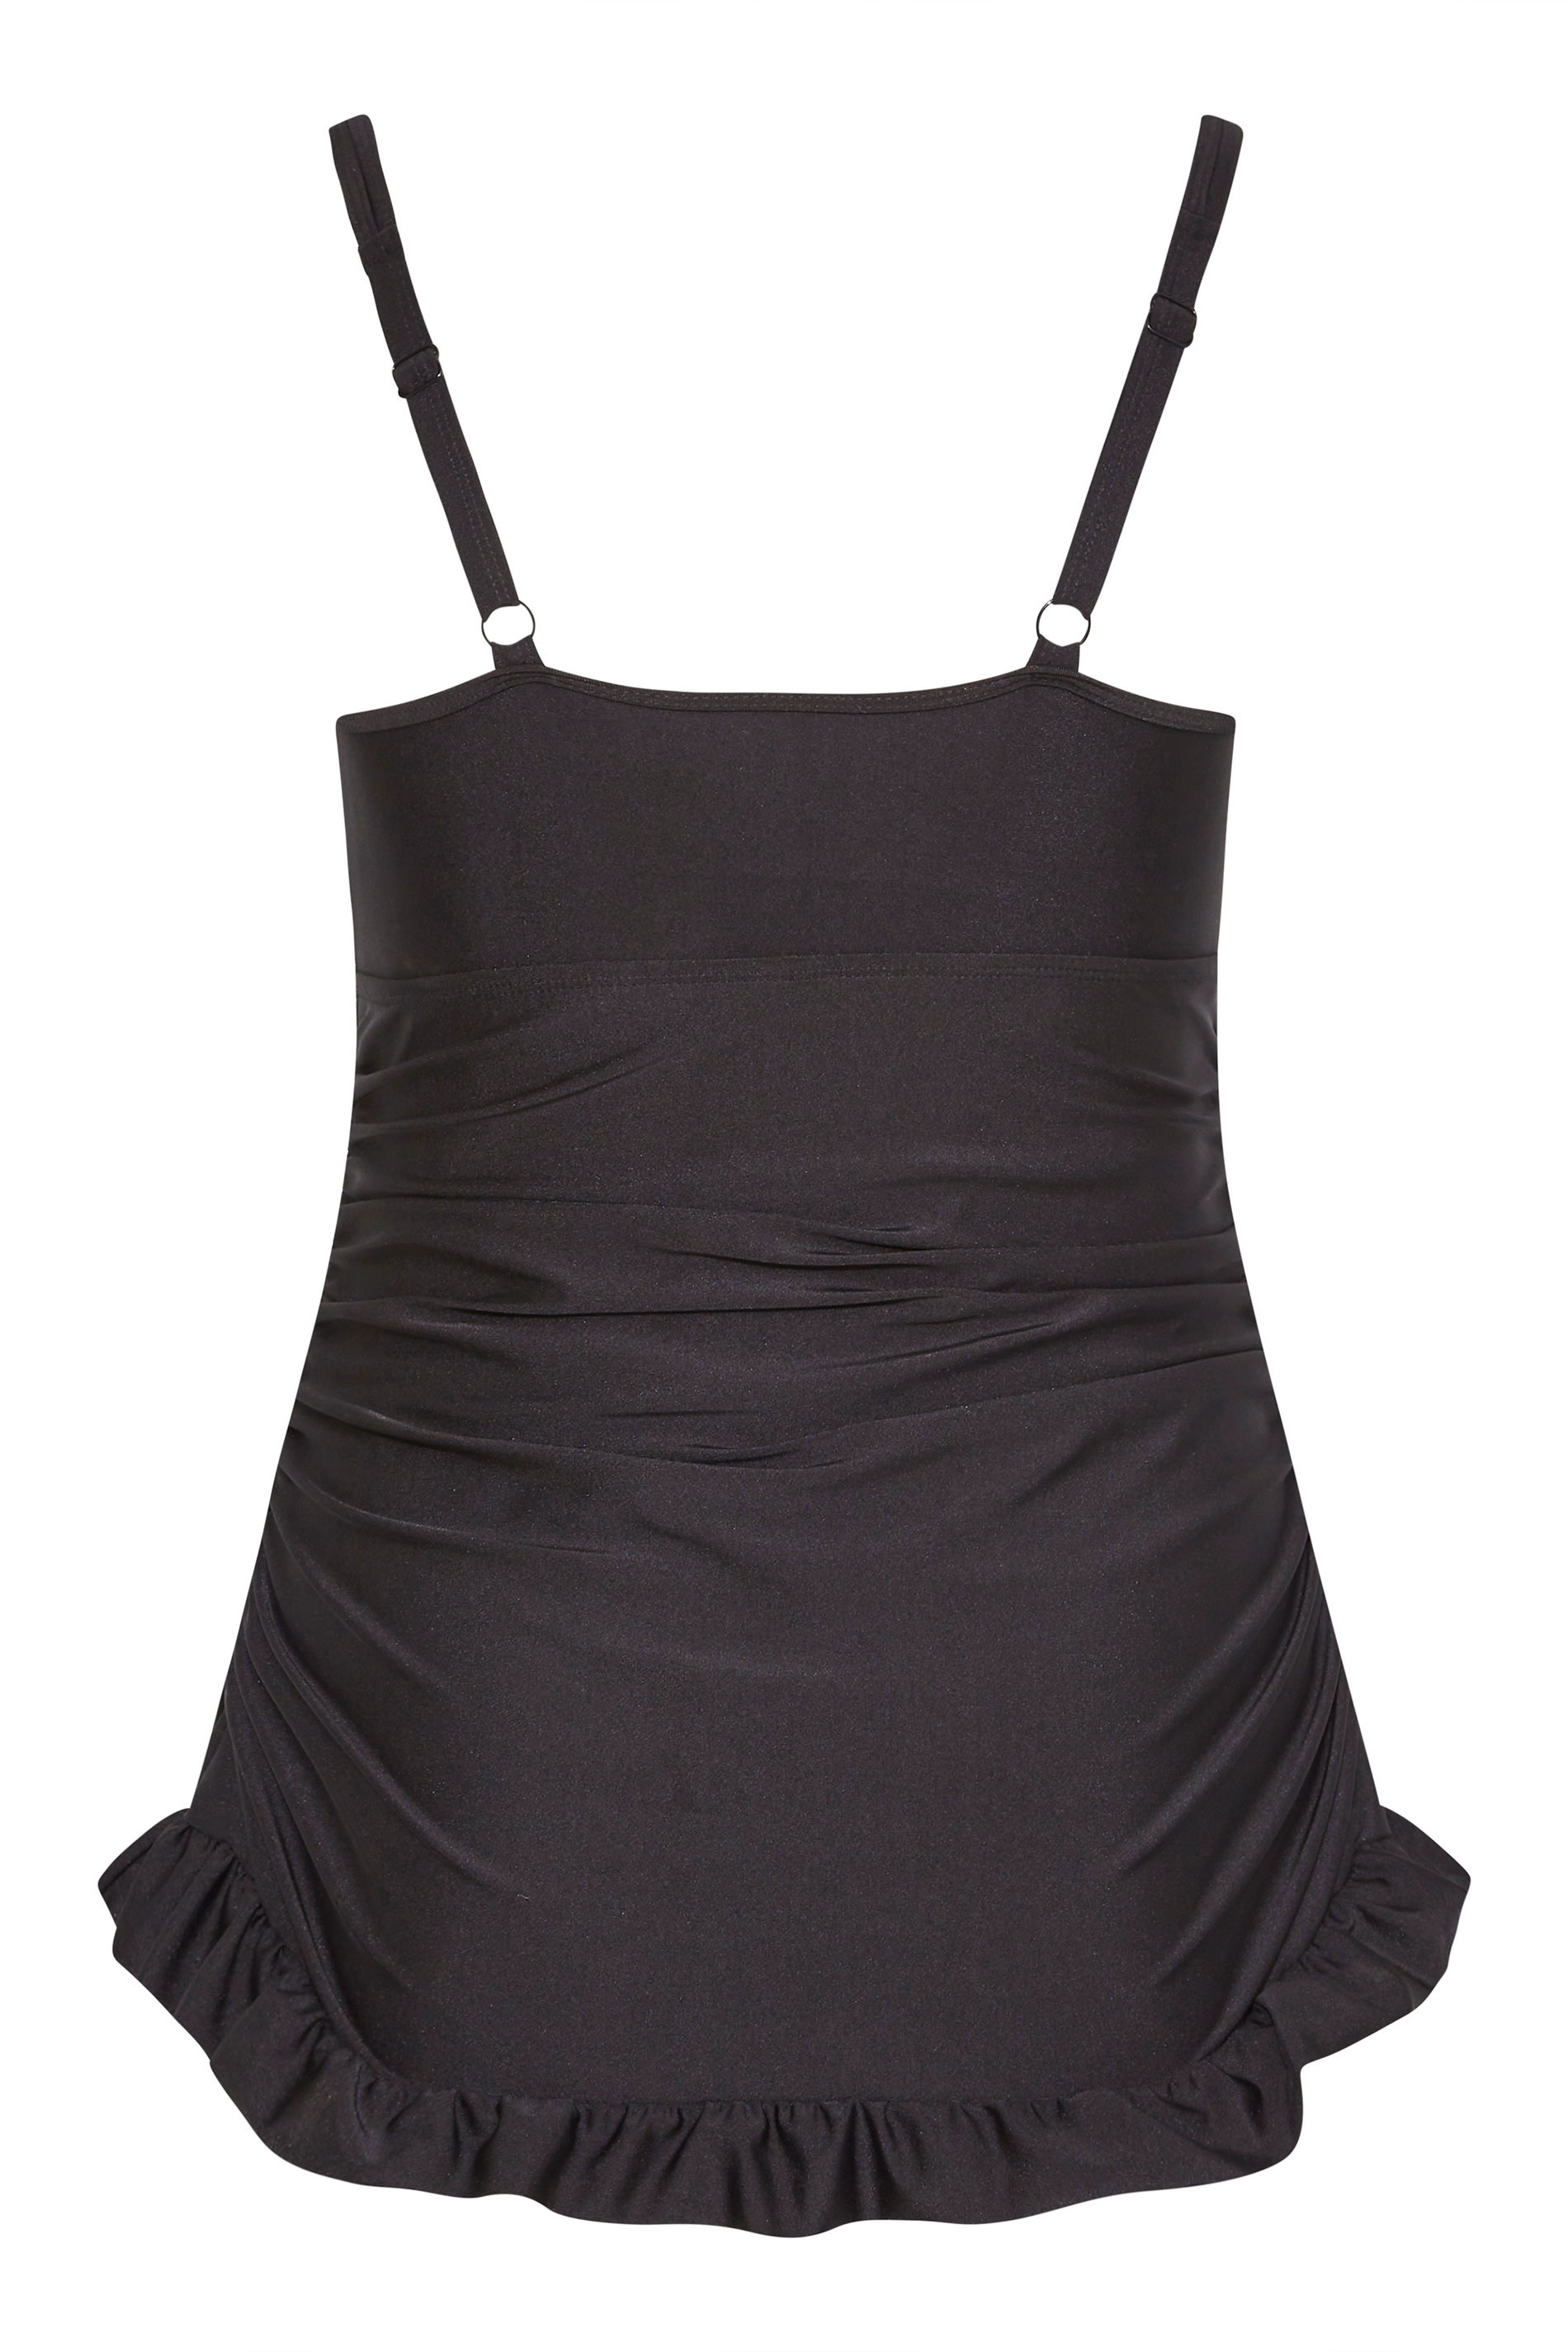 Plus Size Black Plunge Bodycon Tummy Control Swim Dress | Yours Clothing 3